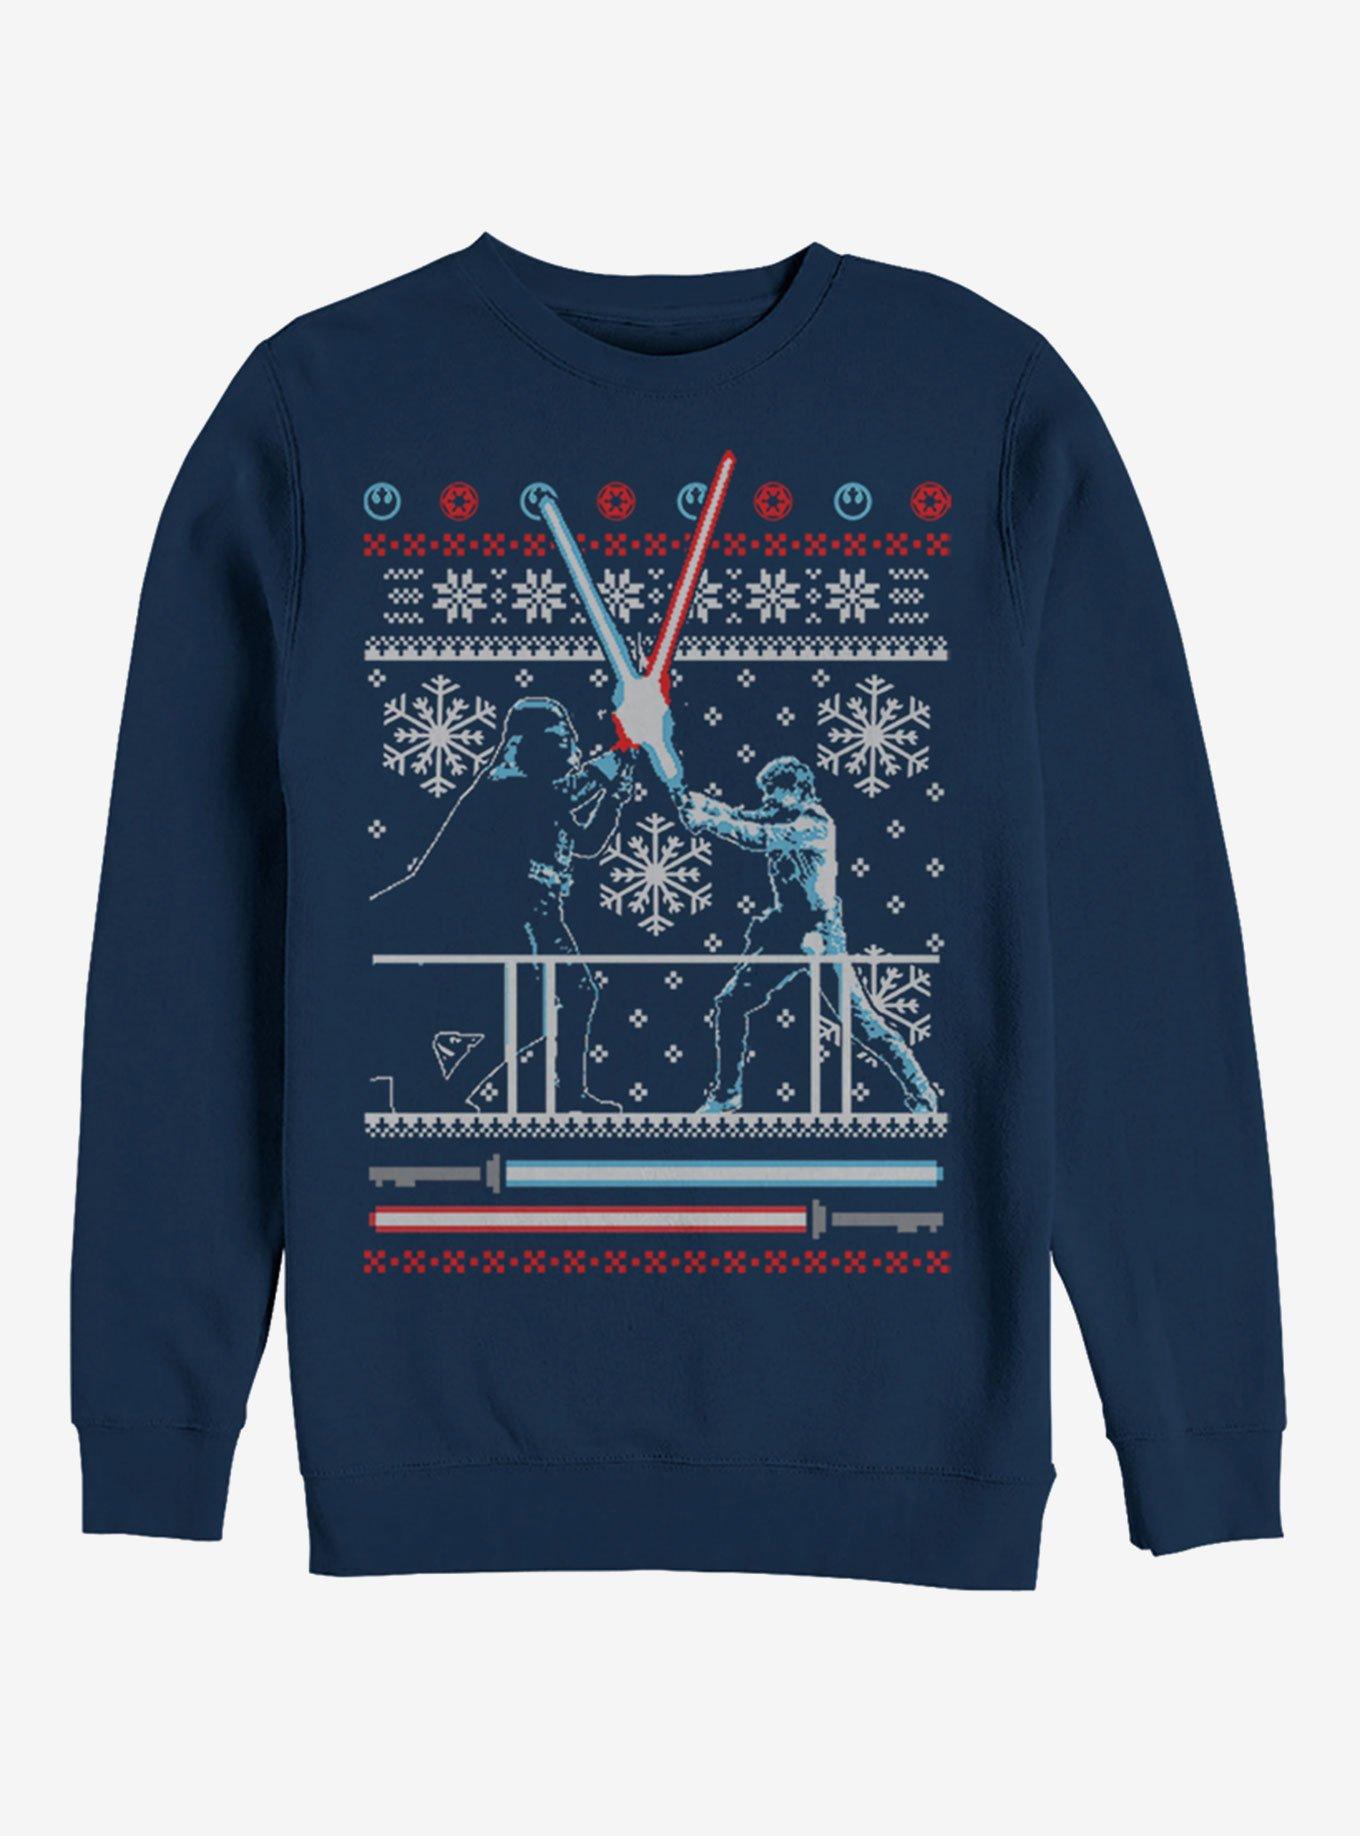 Star Wars Ugly Christmas Sweater Duel Sweatshirt